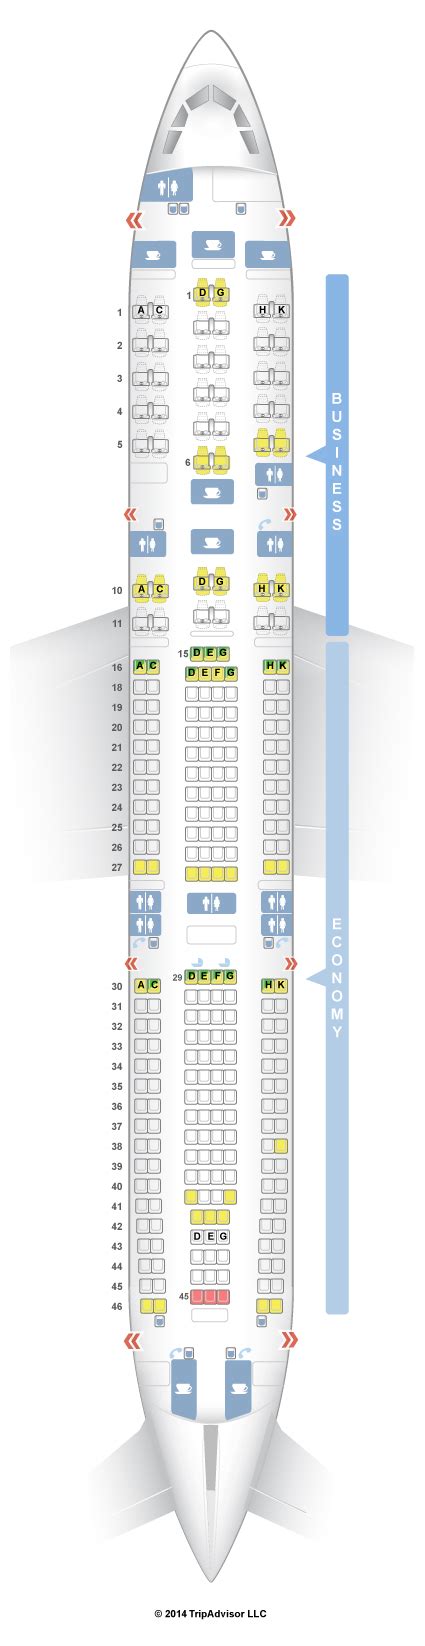 Seatguru Seat Map Lufthansa Airbus A340 300 343 V3